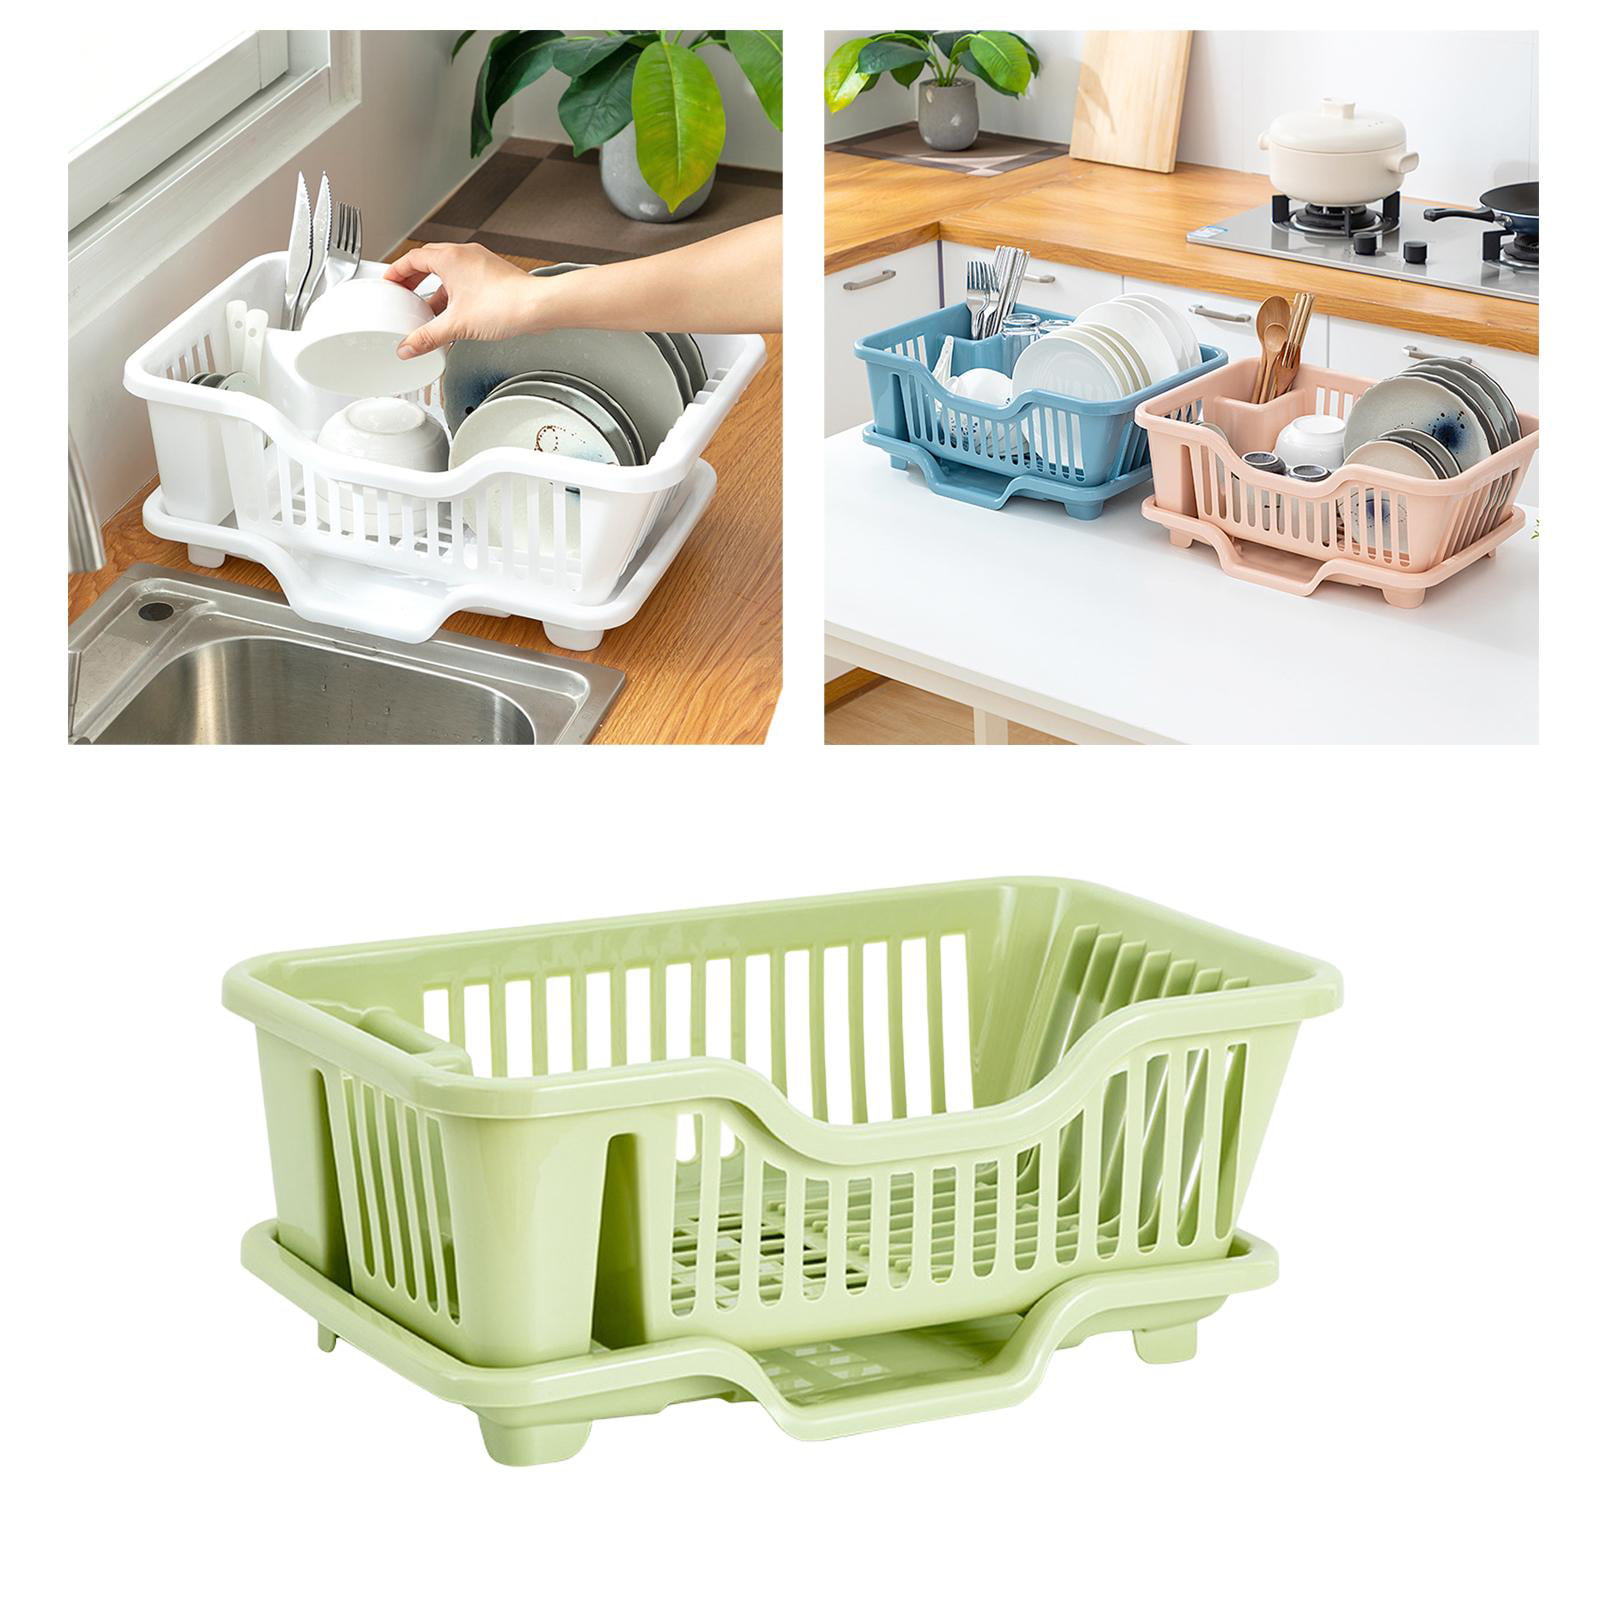 Sarvatr Green Color Polypropylene 3in1 Dish Drainer Rack Kitchen Utensils  Organizer Drying Basket,utensil basket for kitchen with Drain Tray -  Sarvatr Store